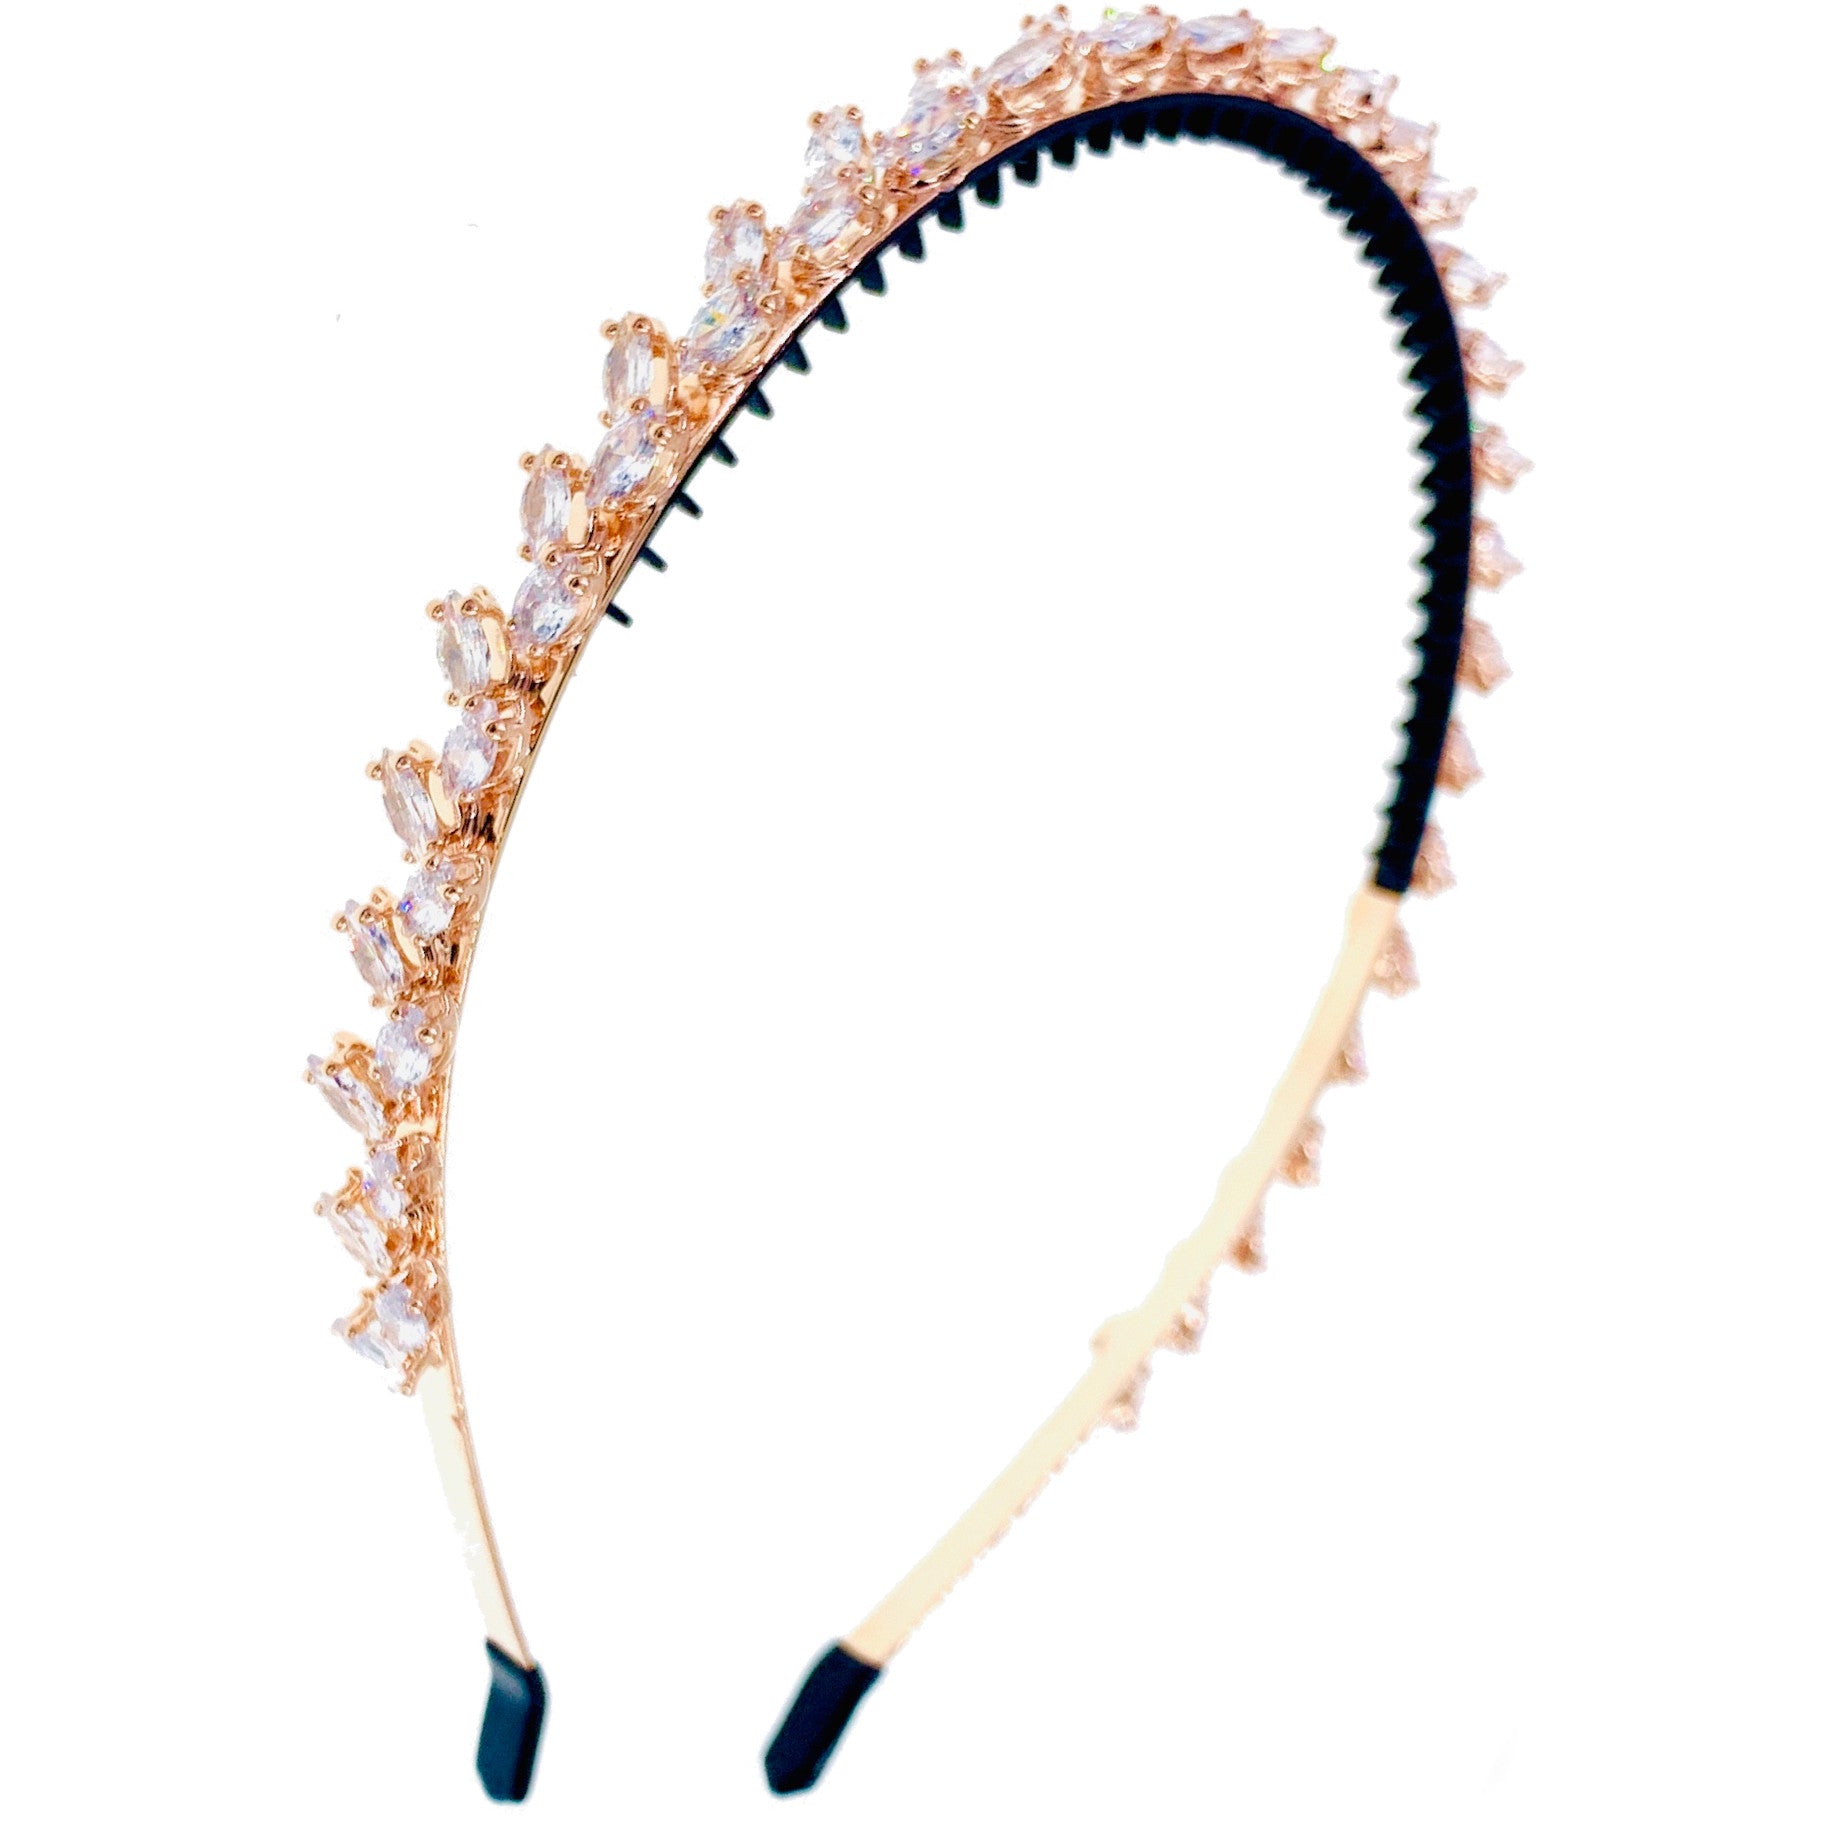 Cipriana Glam Leaf Headband Hairband use Cubic Zirconia CZ Crystal Gemstone Emerald Green Sapphire Blue Navy Hot Pink Champagne Rose Gold Silver, Headband - MOGHANT